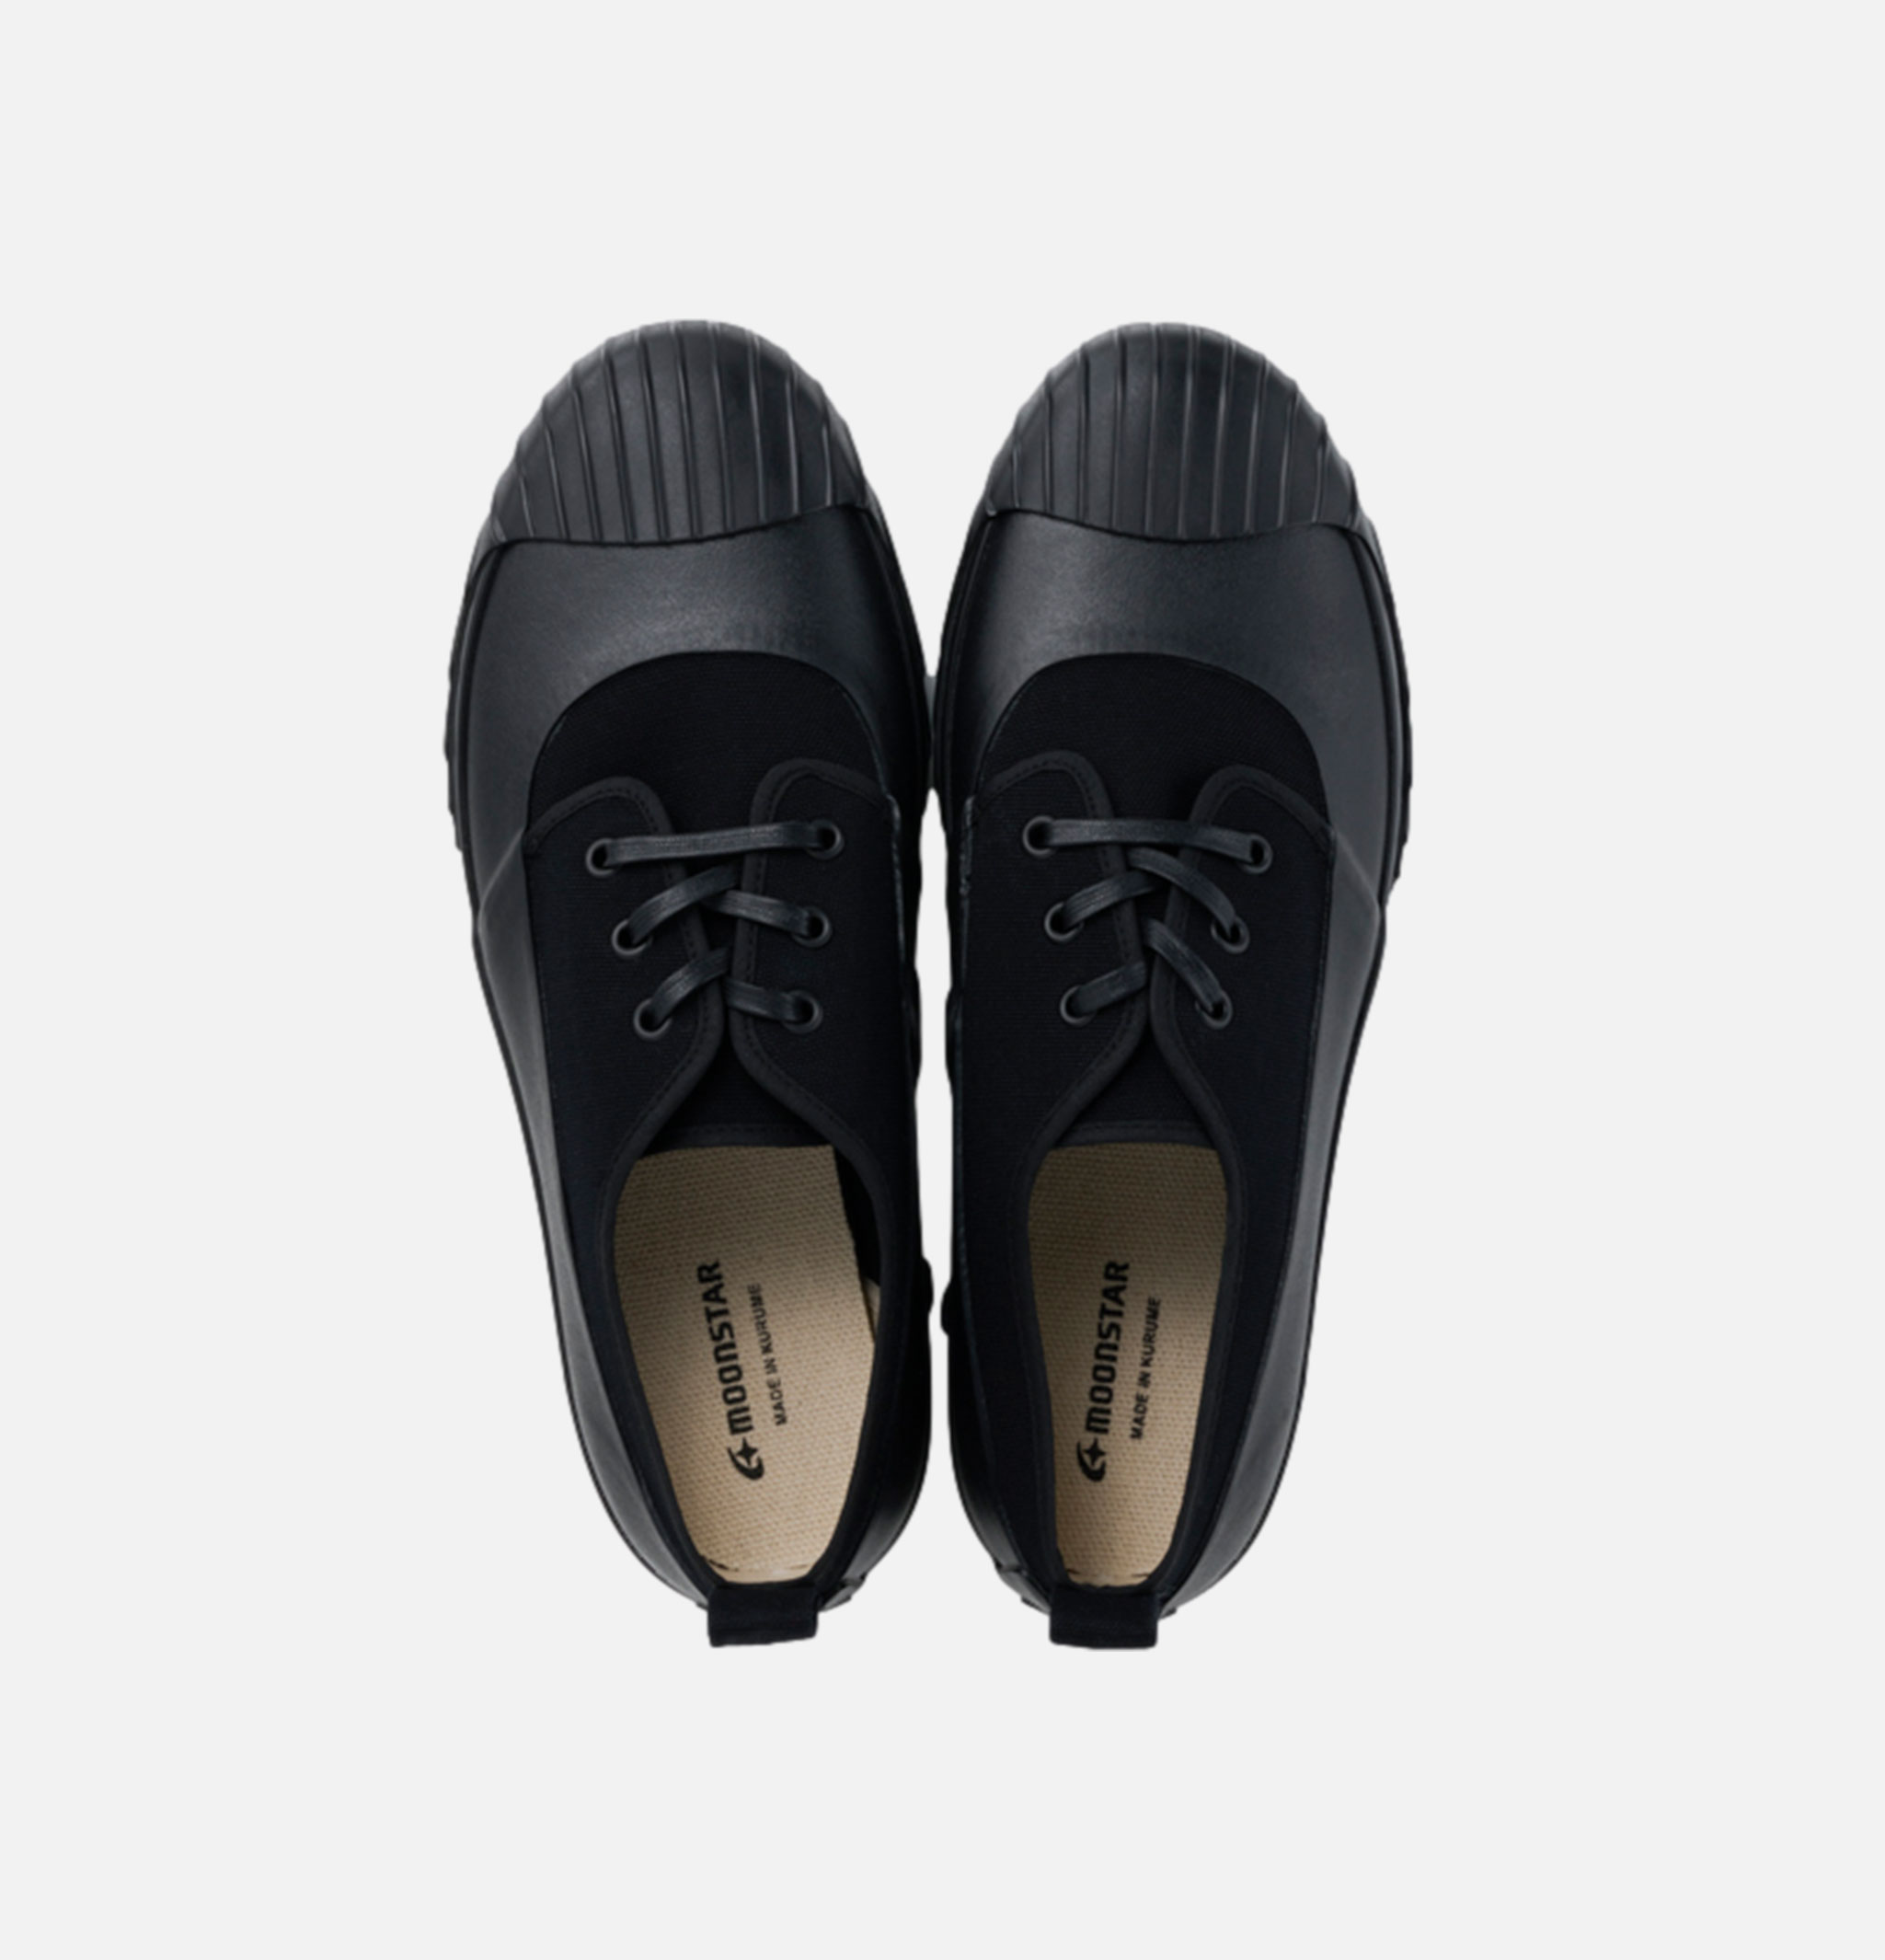 Moonstar Alweather Basse Noir Chaussures